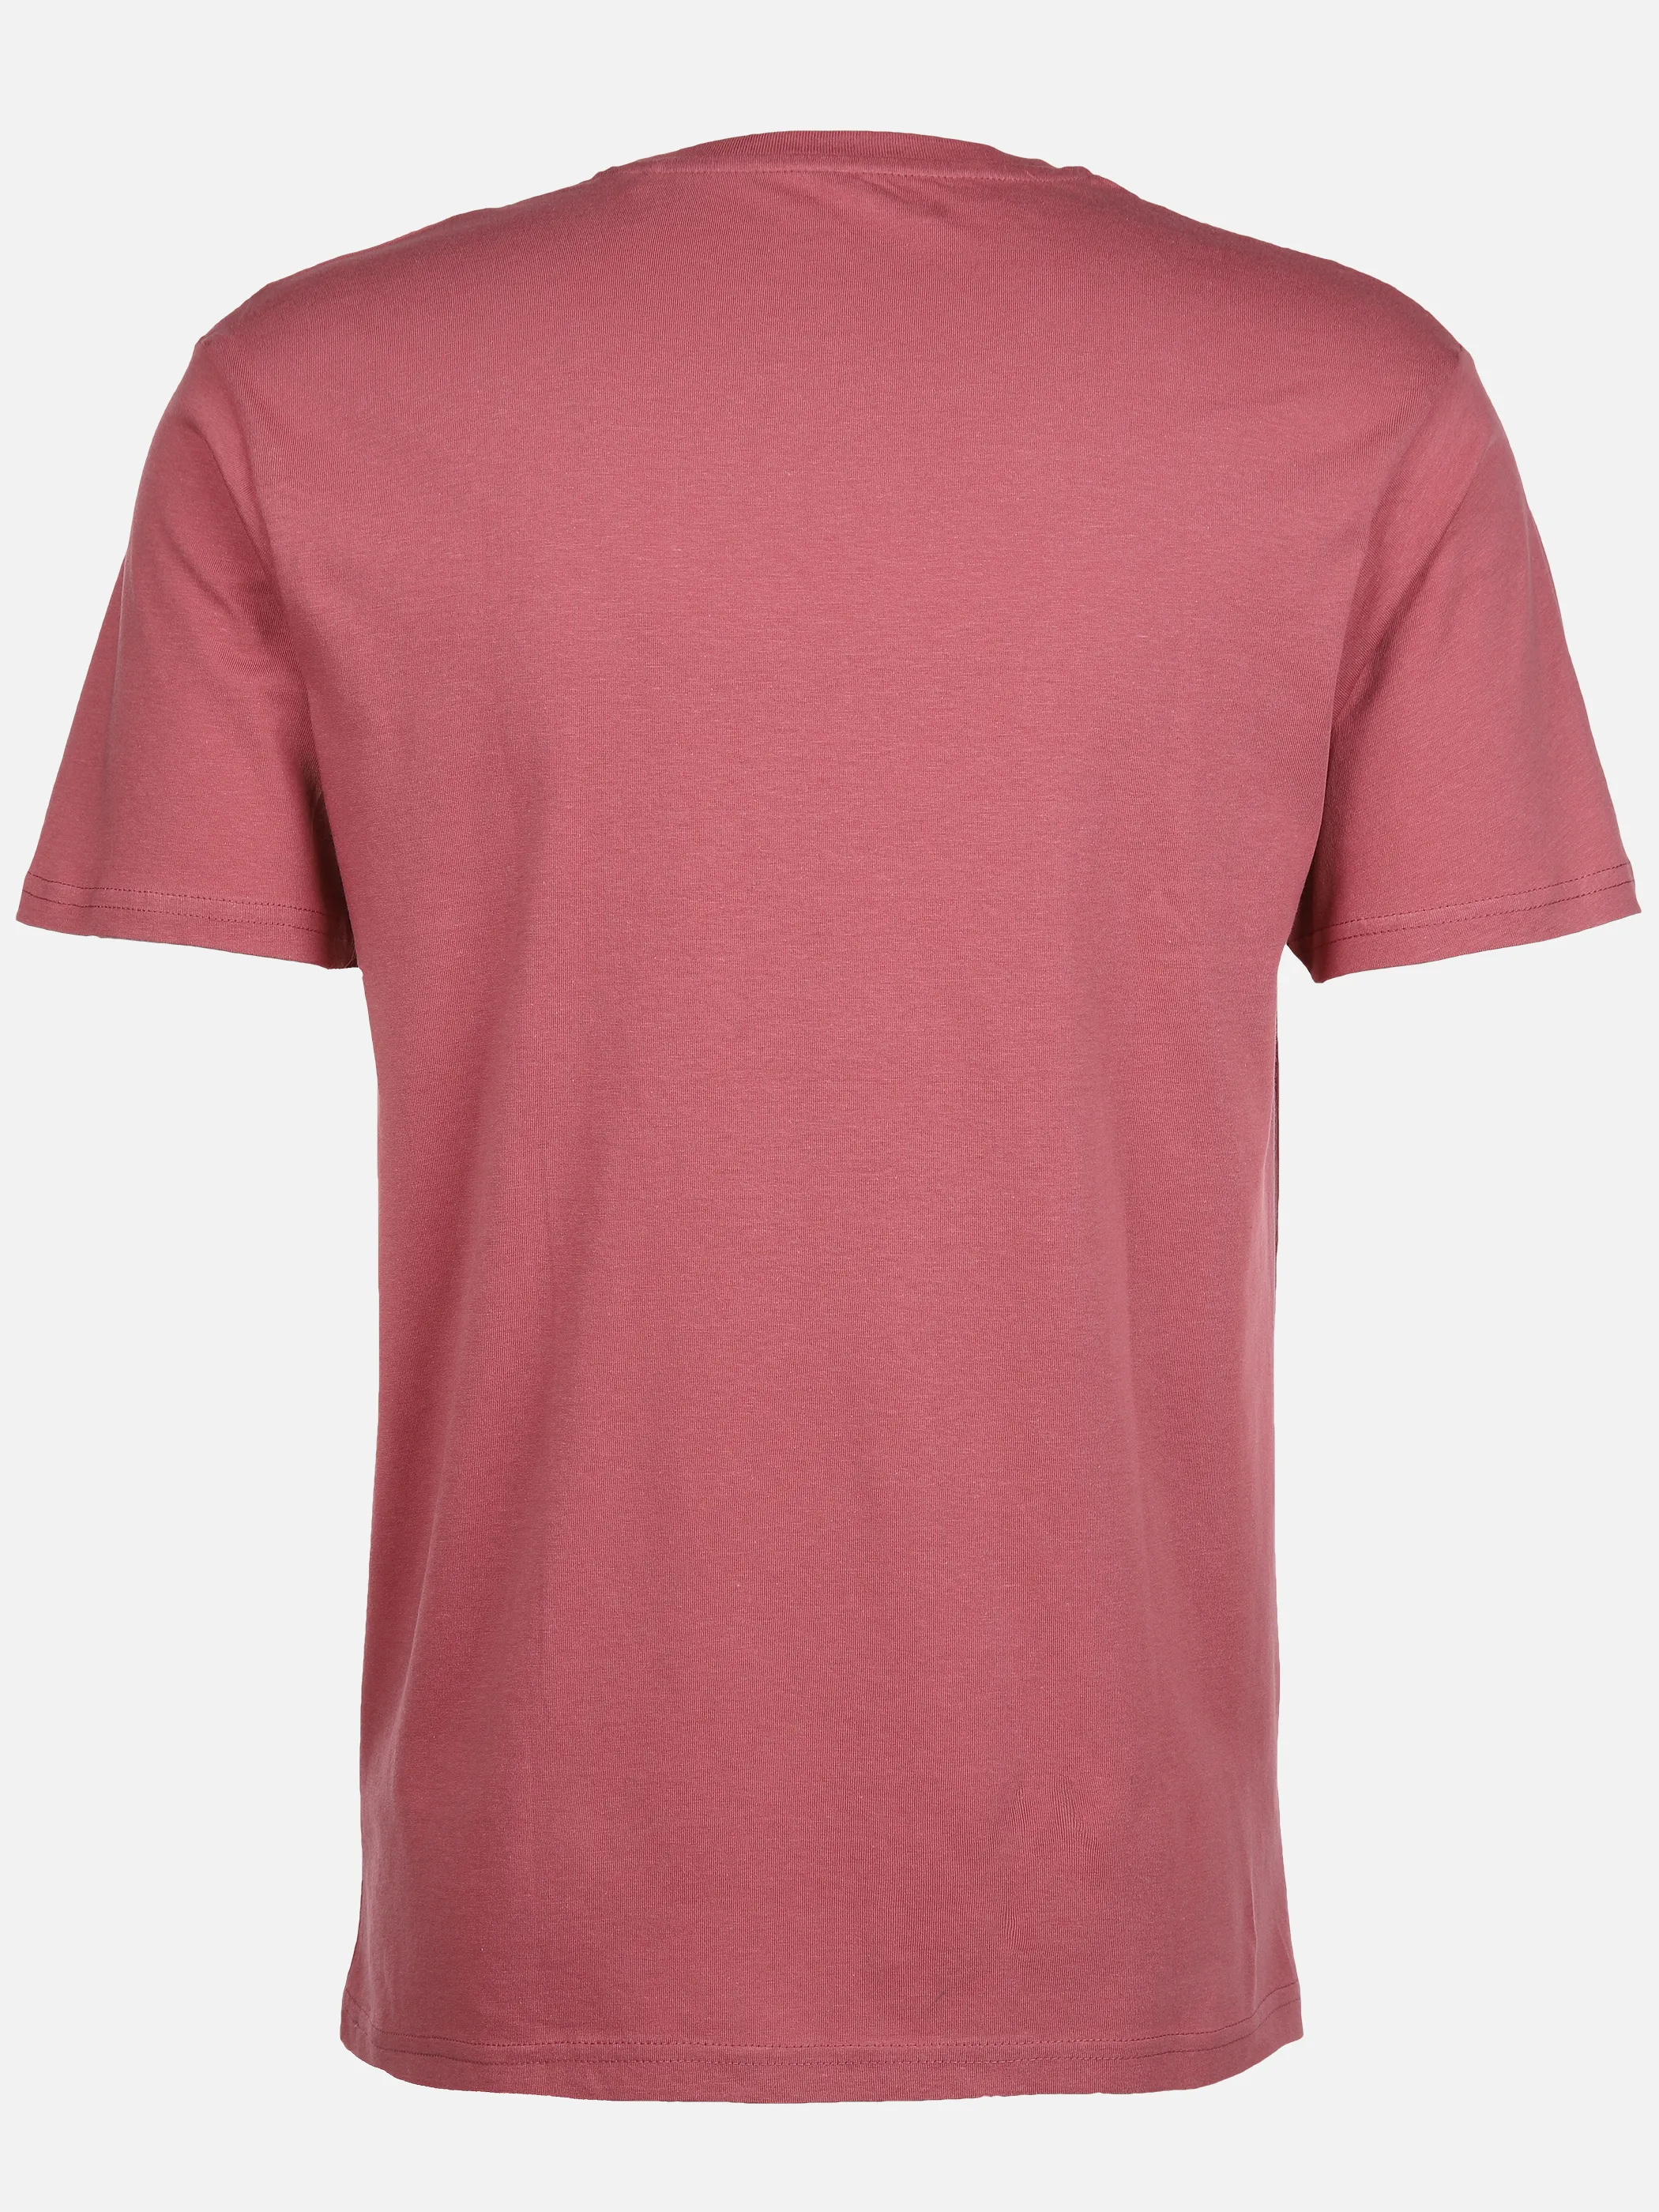 One Way YF-He T-Shirt Basic Rosa 890068 17-1609TCX 2